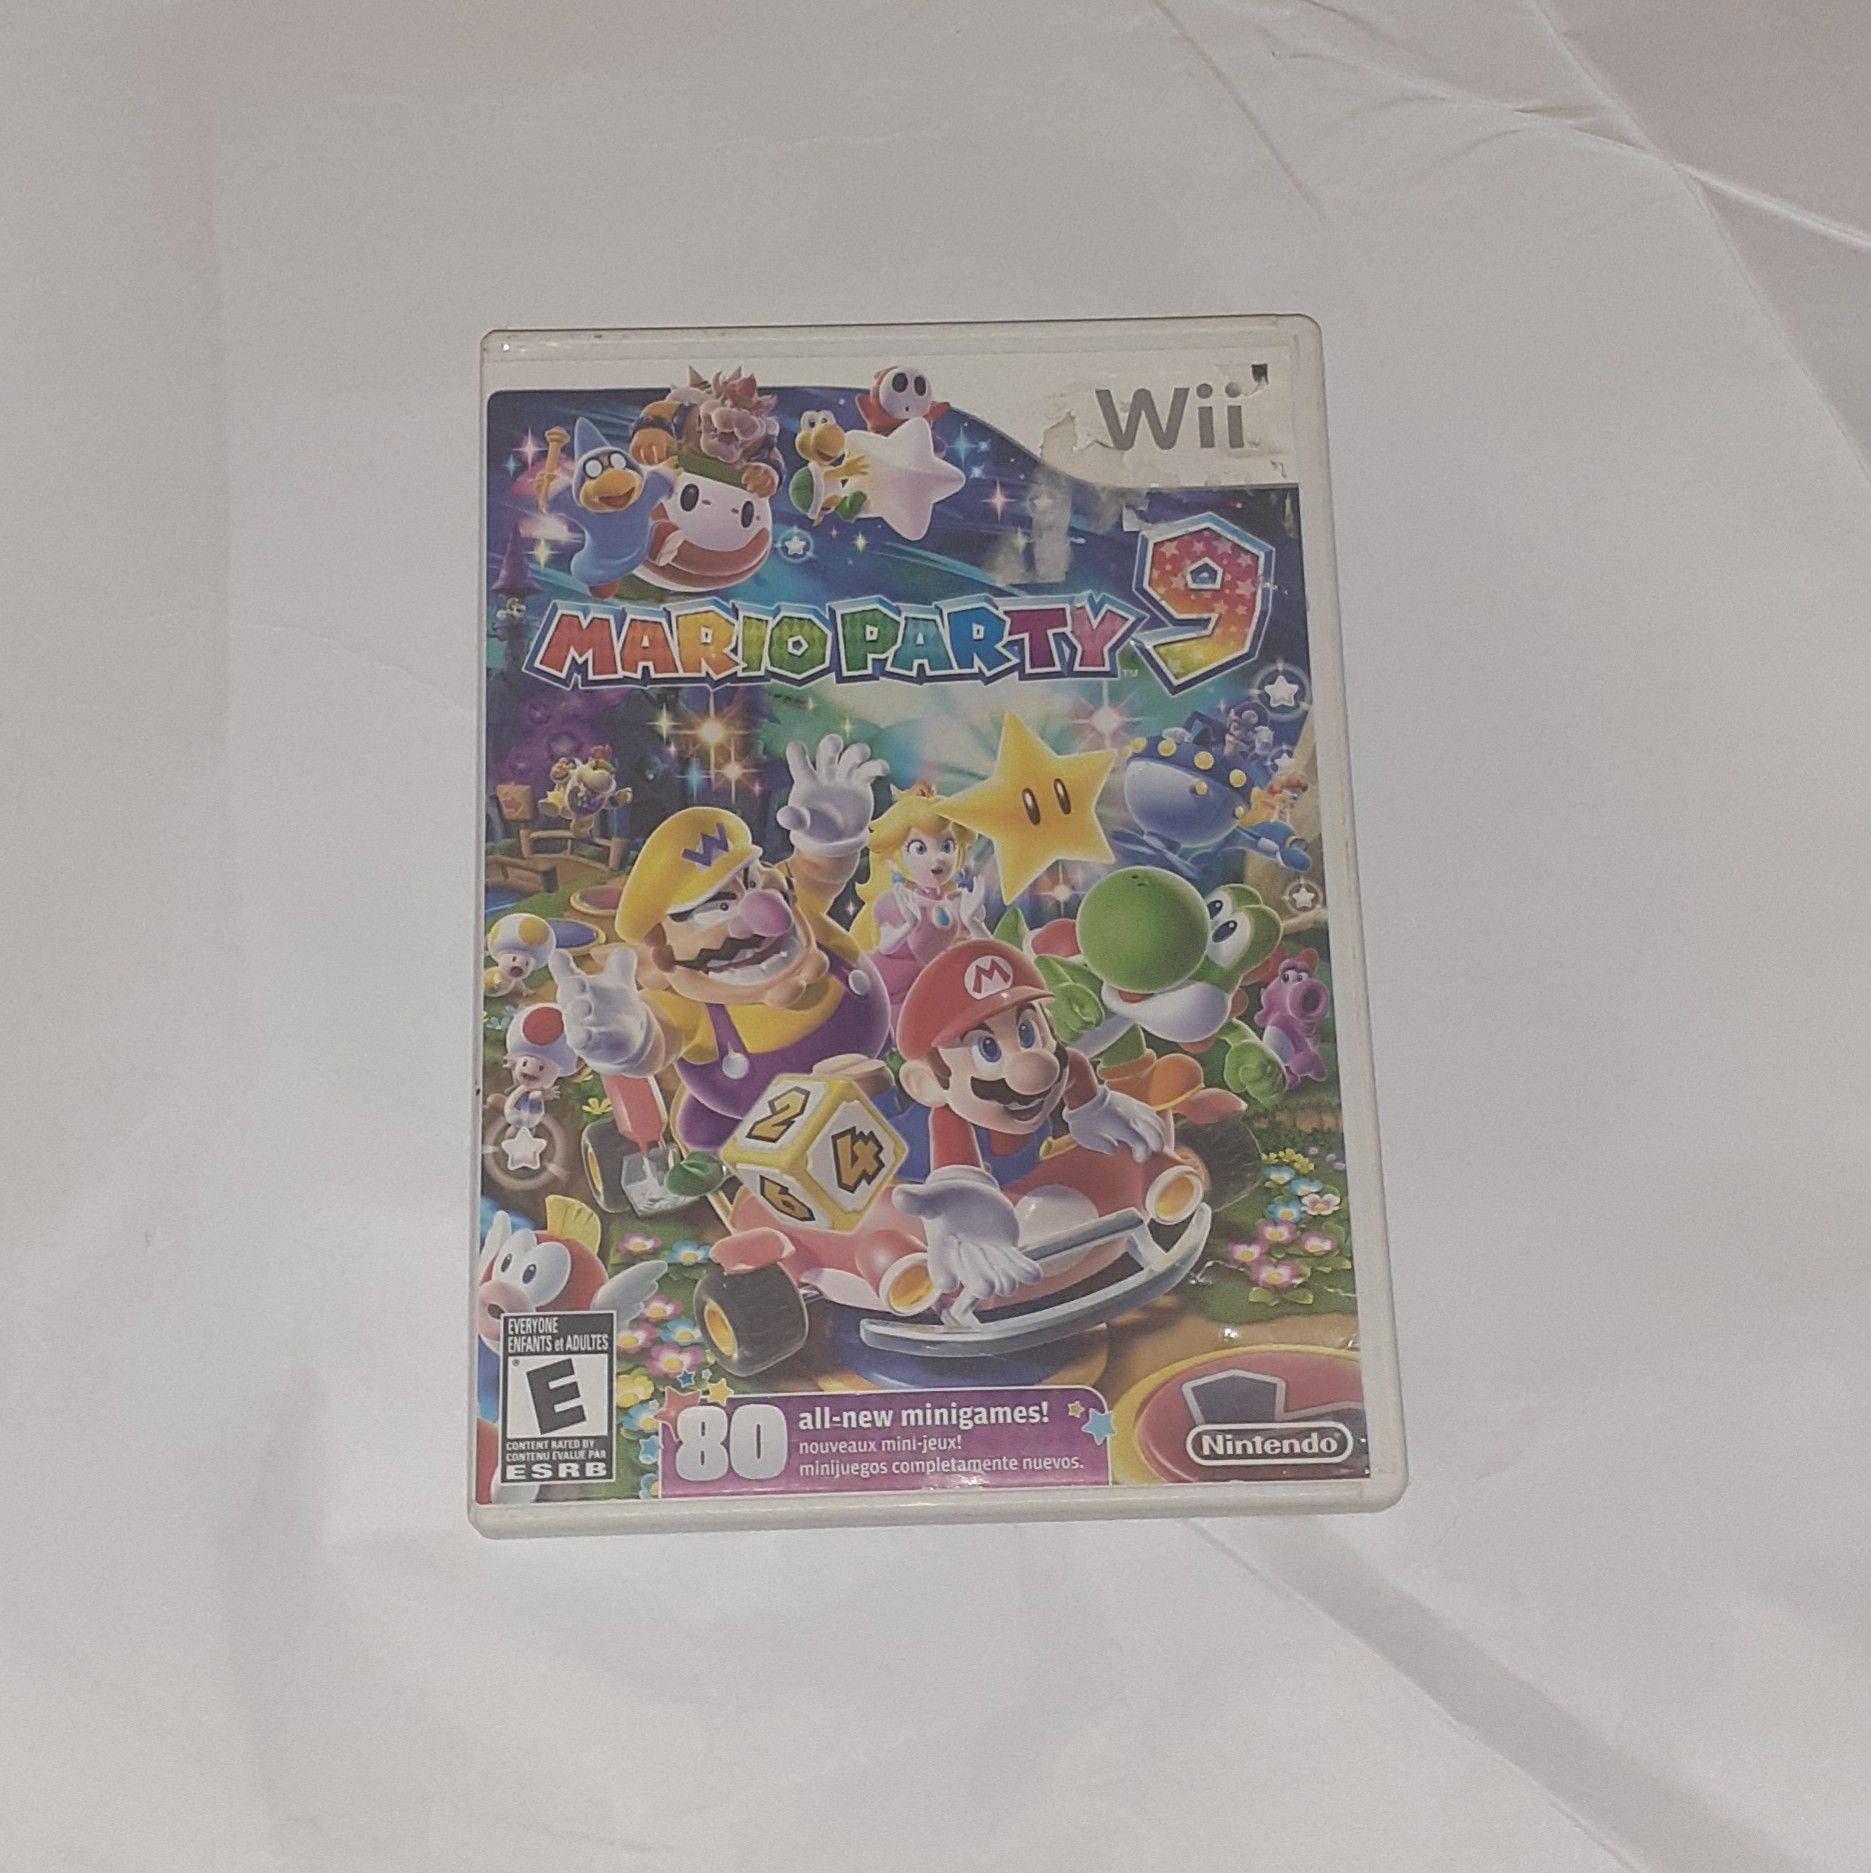 Mario Party 9 for Nintendo Wii